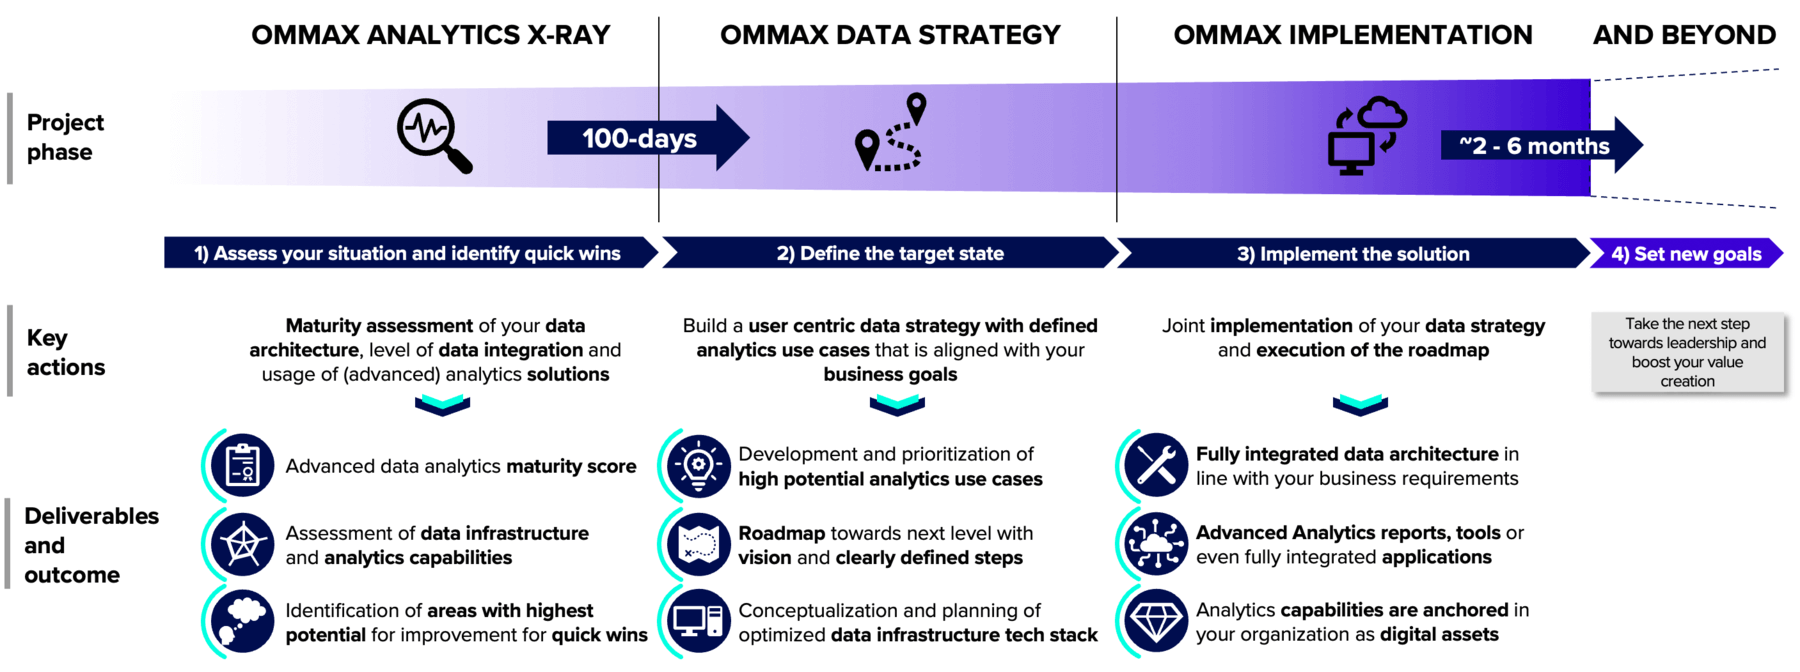 OMMAX's 100-Tage-Roadmap zu Advanced Data Analytics